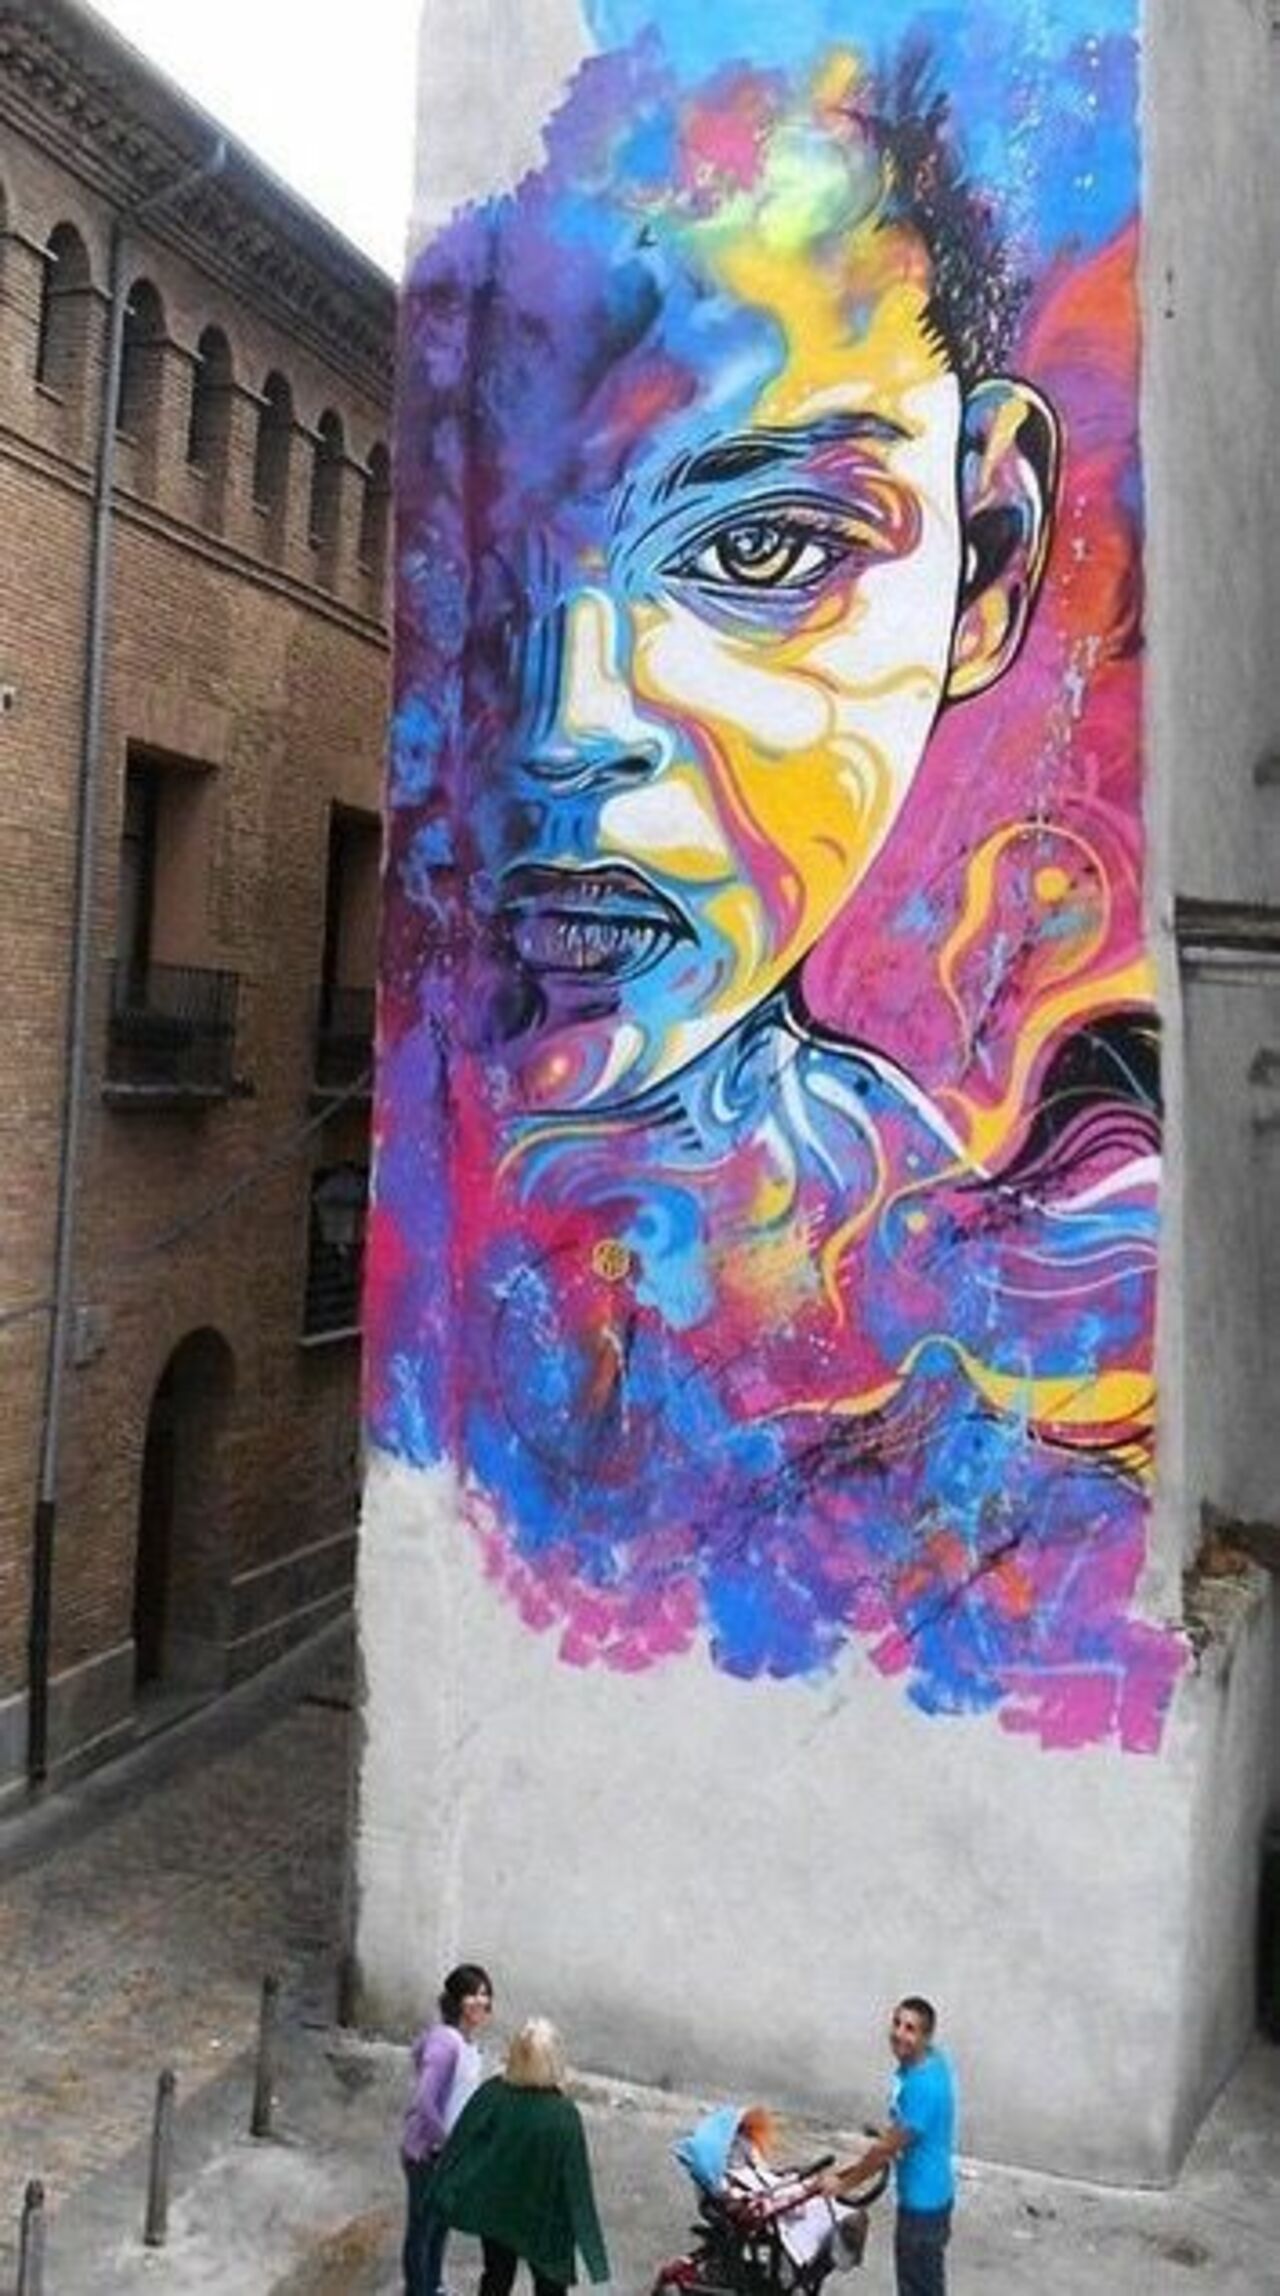 by C215 in Tudela, Spain#streetart #mural #art #graffiti https://t.co/zSmvV8lXx6